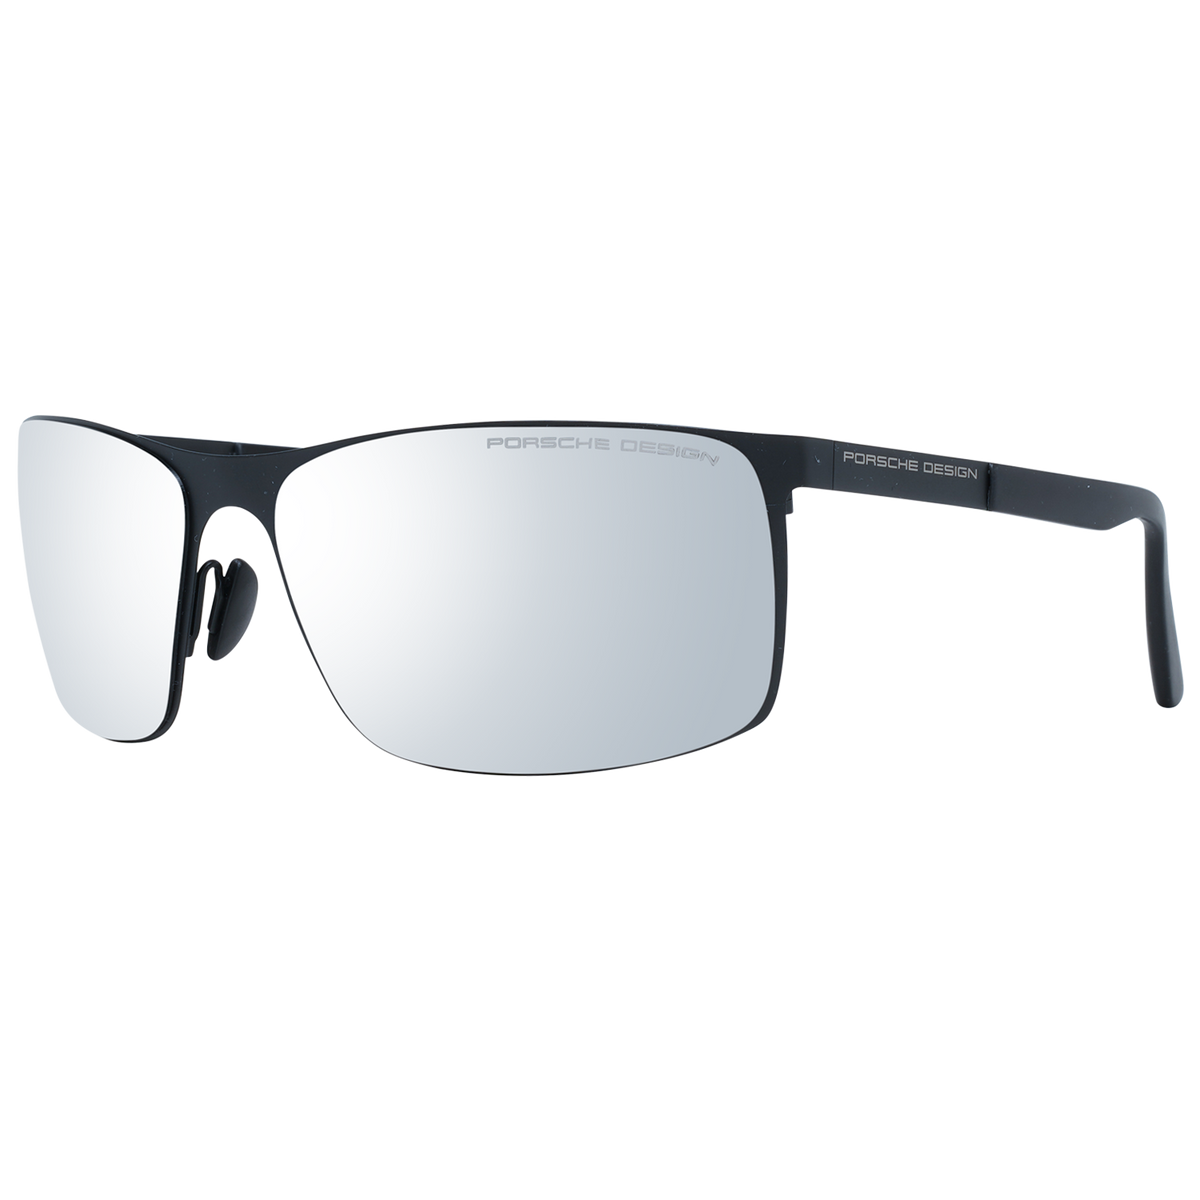 Porsche Design Sunglasses Men Women Black Mirrored P8566 F 64